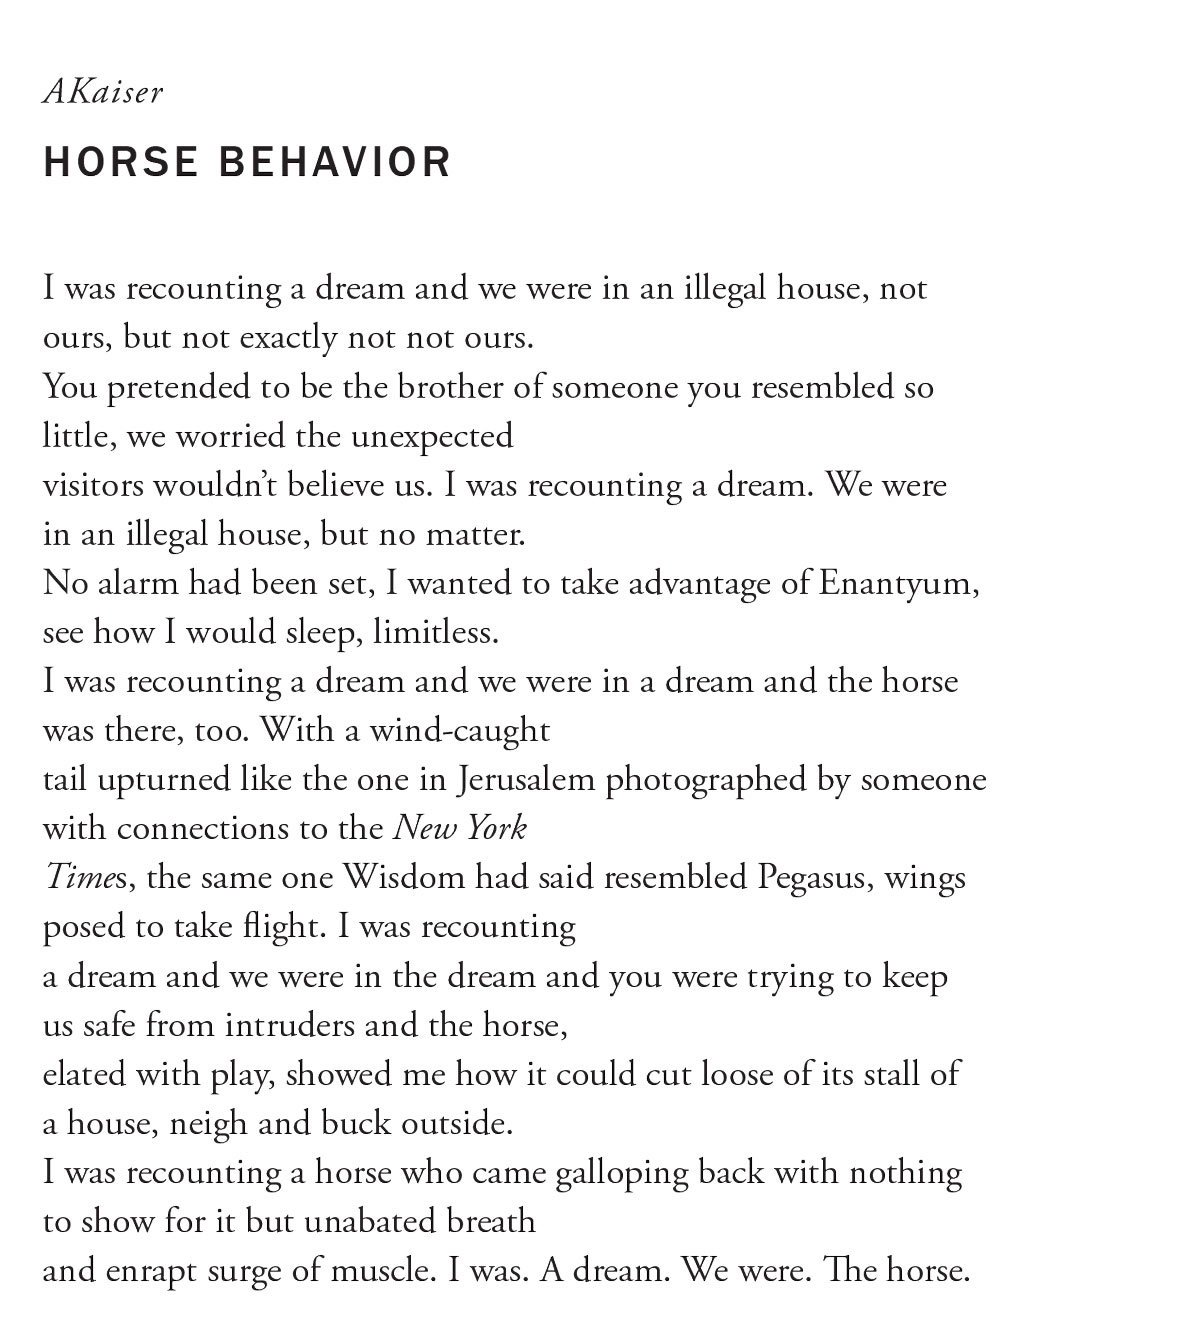 Horse Behavior by A. Kaiser